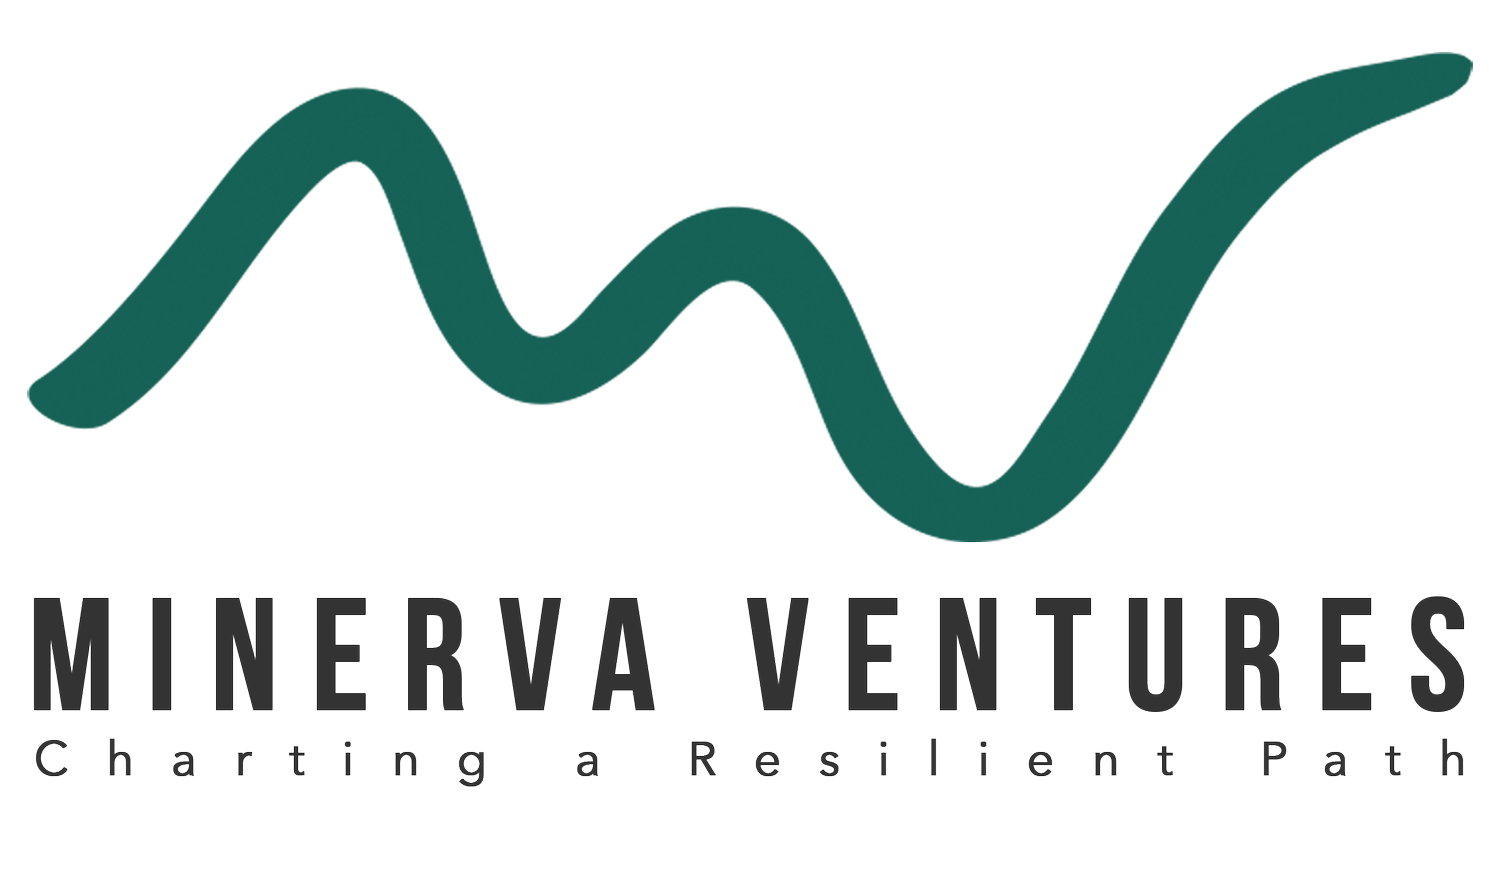 MINERVA VENTURES LLC